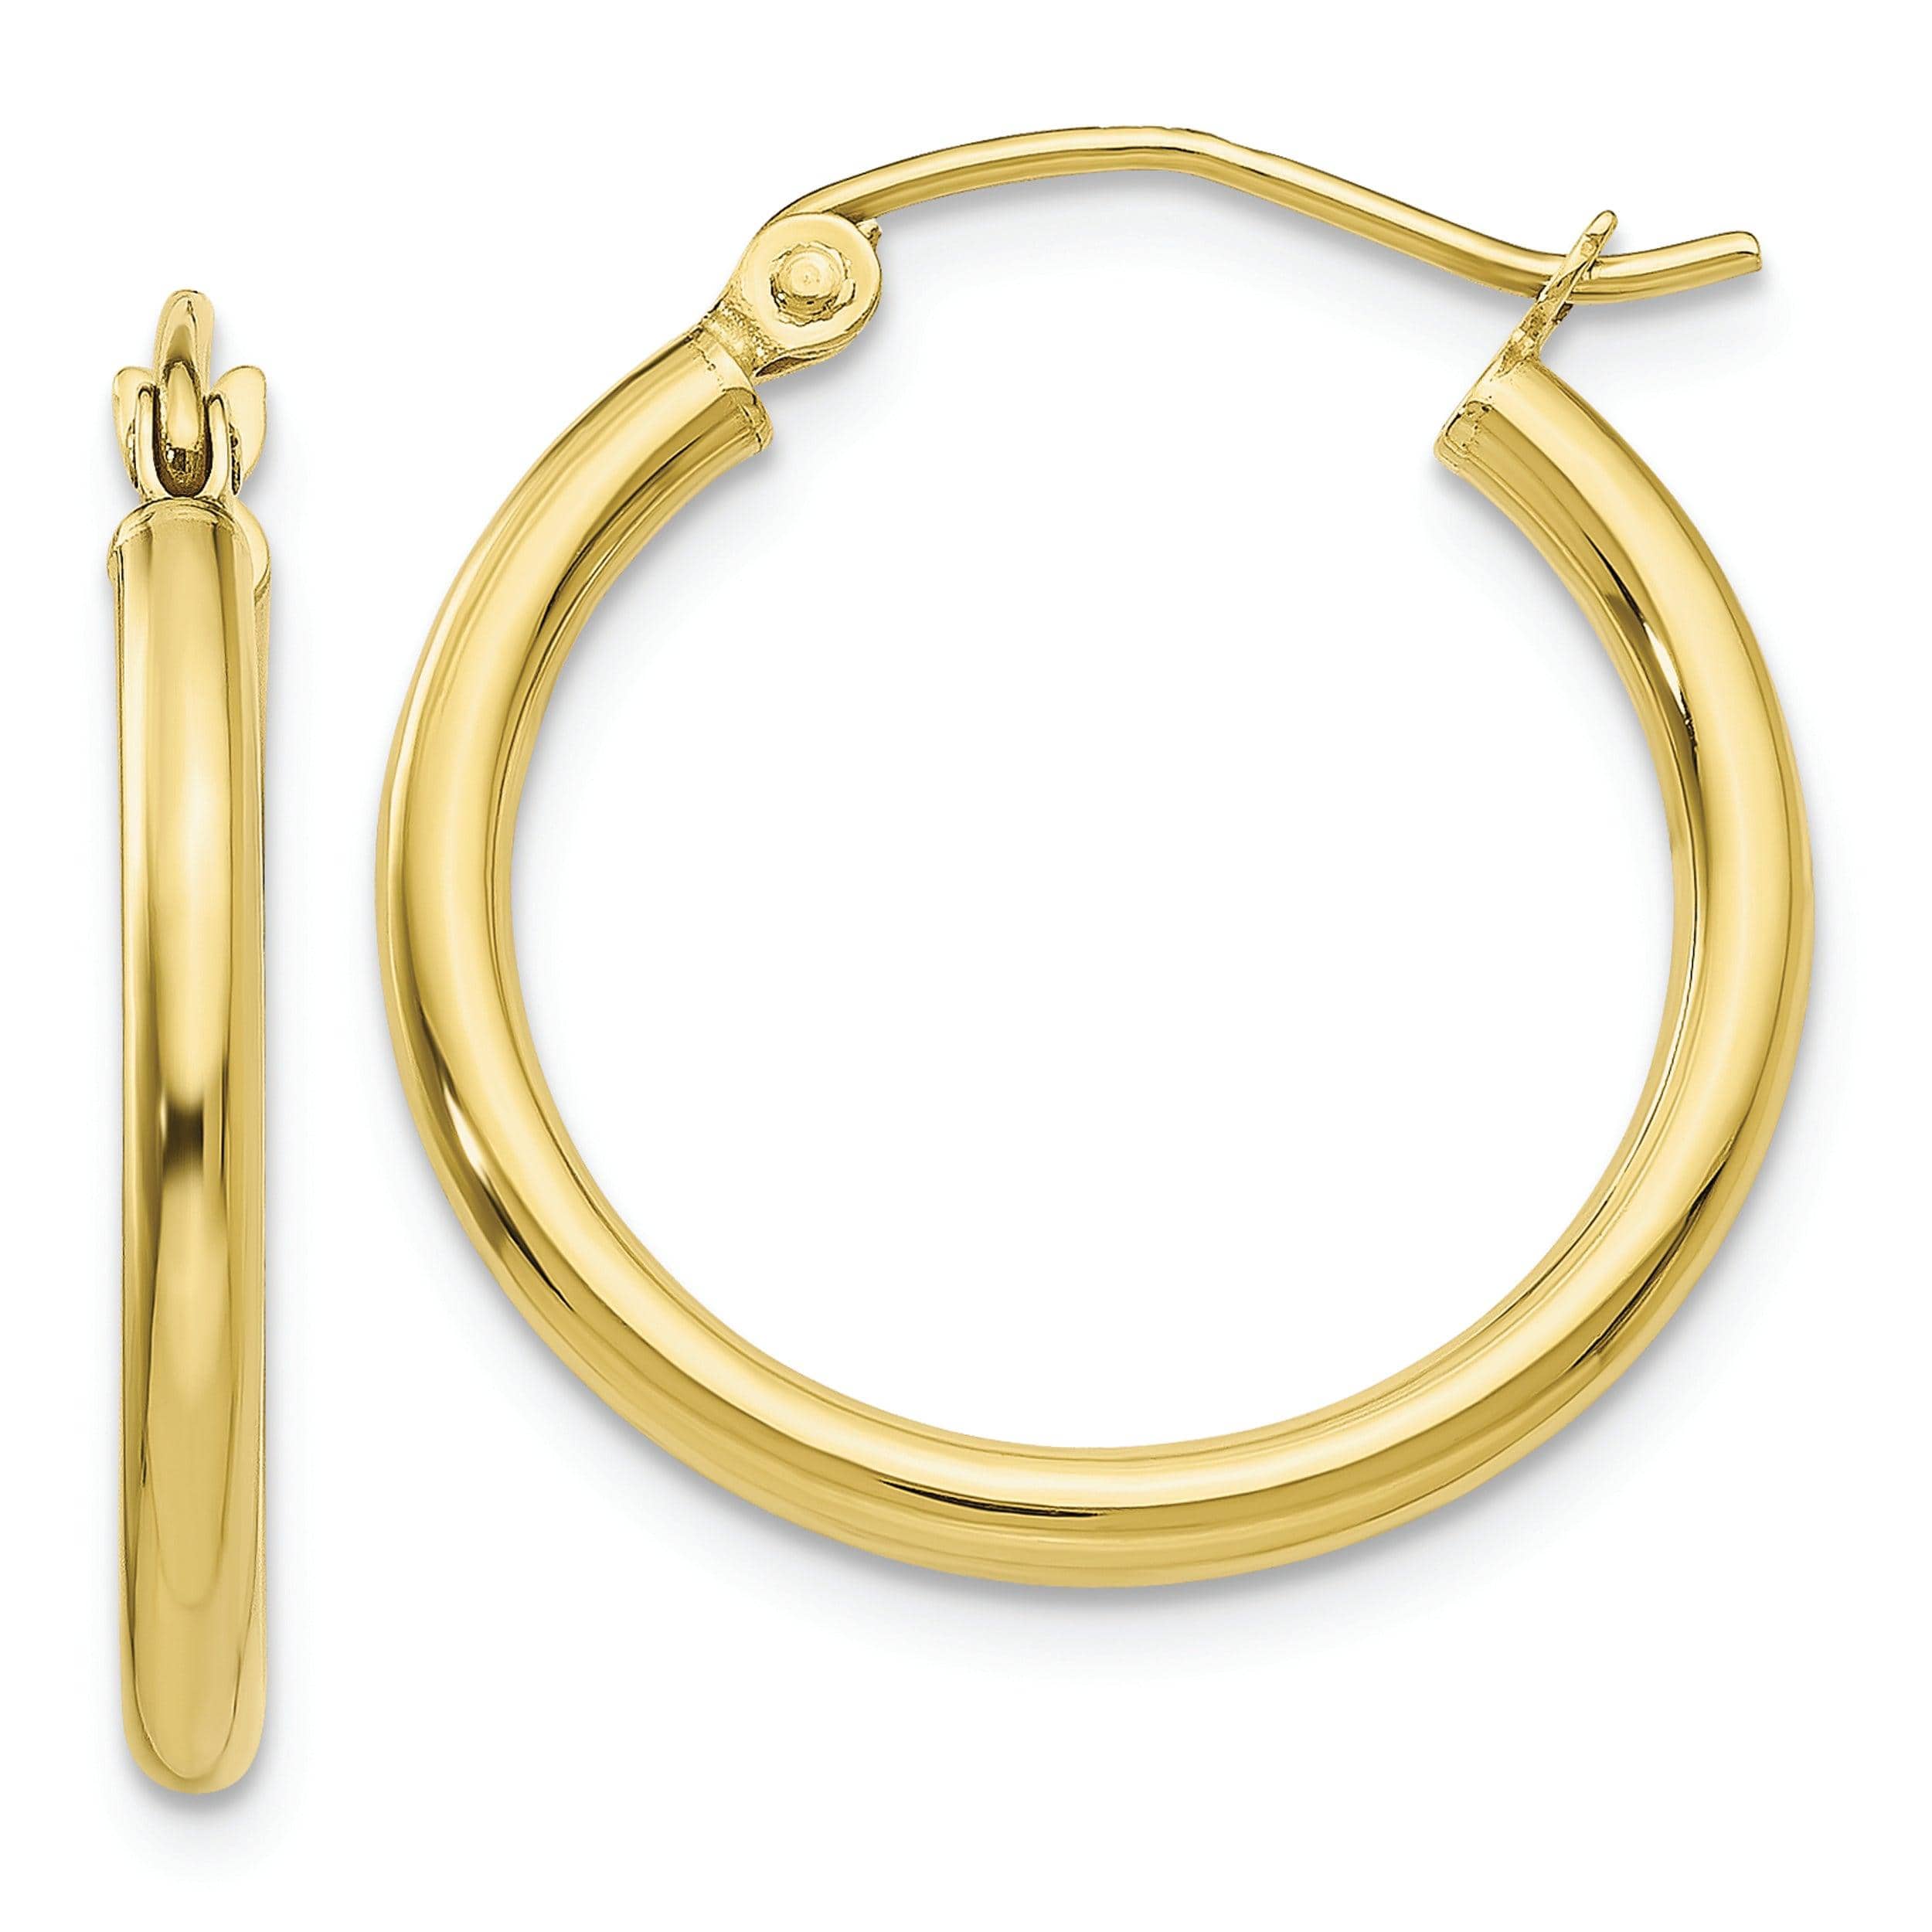 Quality Gold Earrings 10K Polished 2mm Tube Hoop Earrings